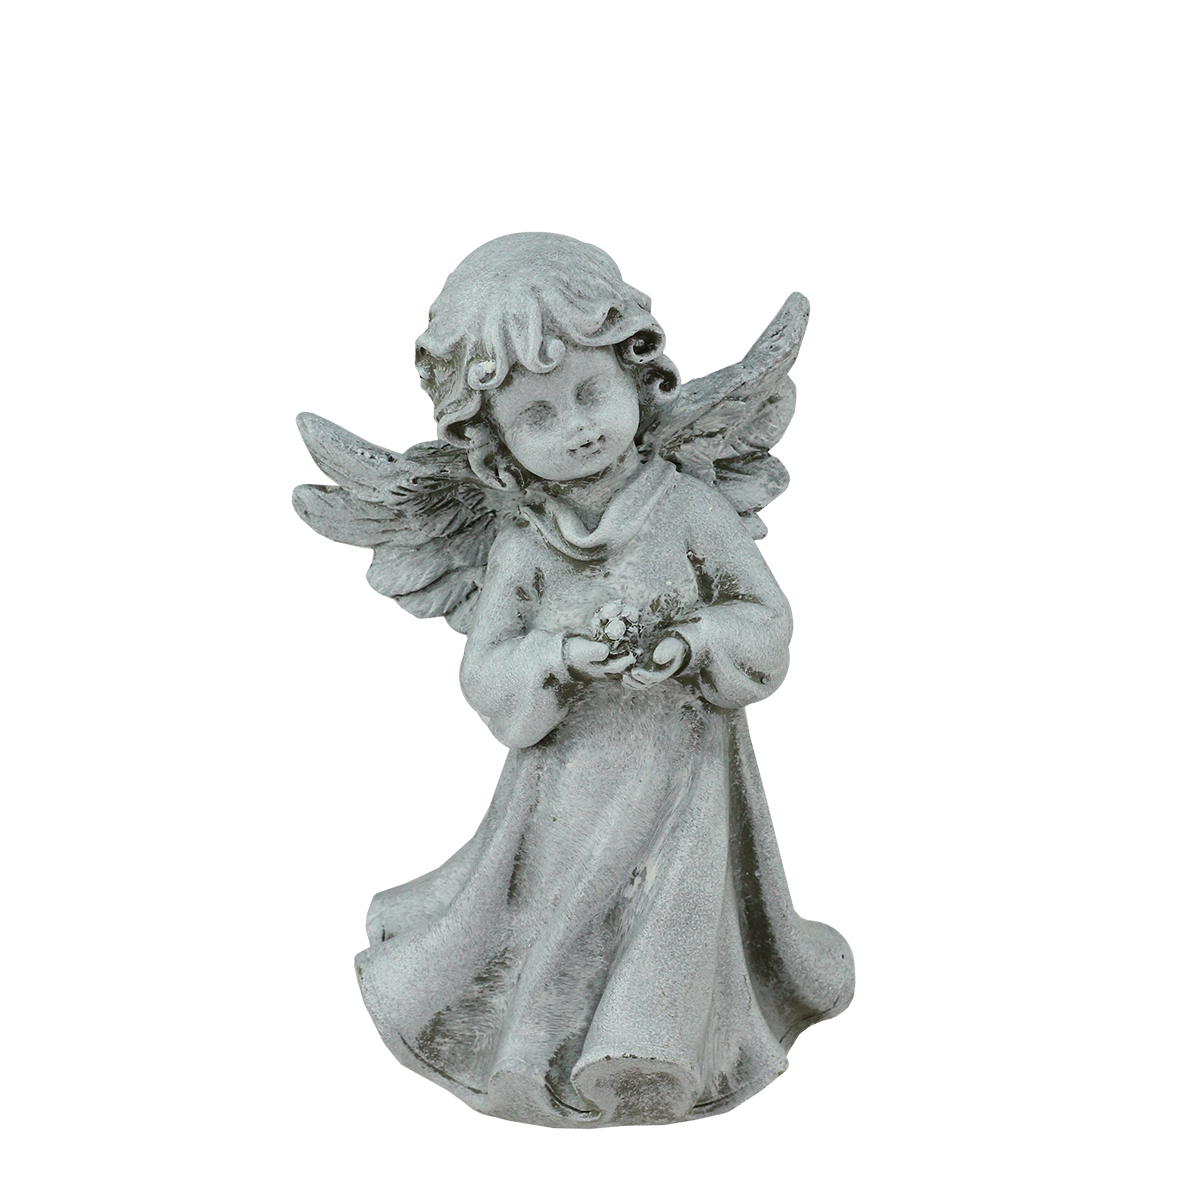 Northlight 6.5" Angel Girl Holding Flower Outdoor Garden Statue - image 1 of 5